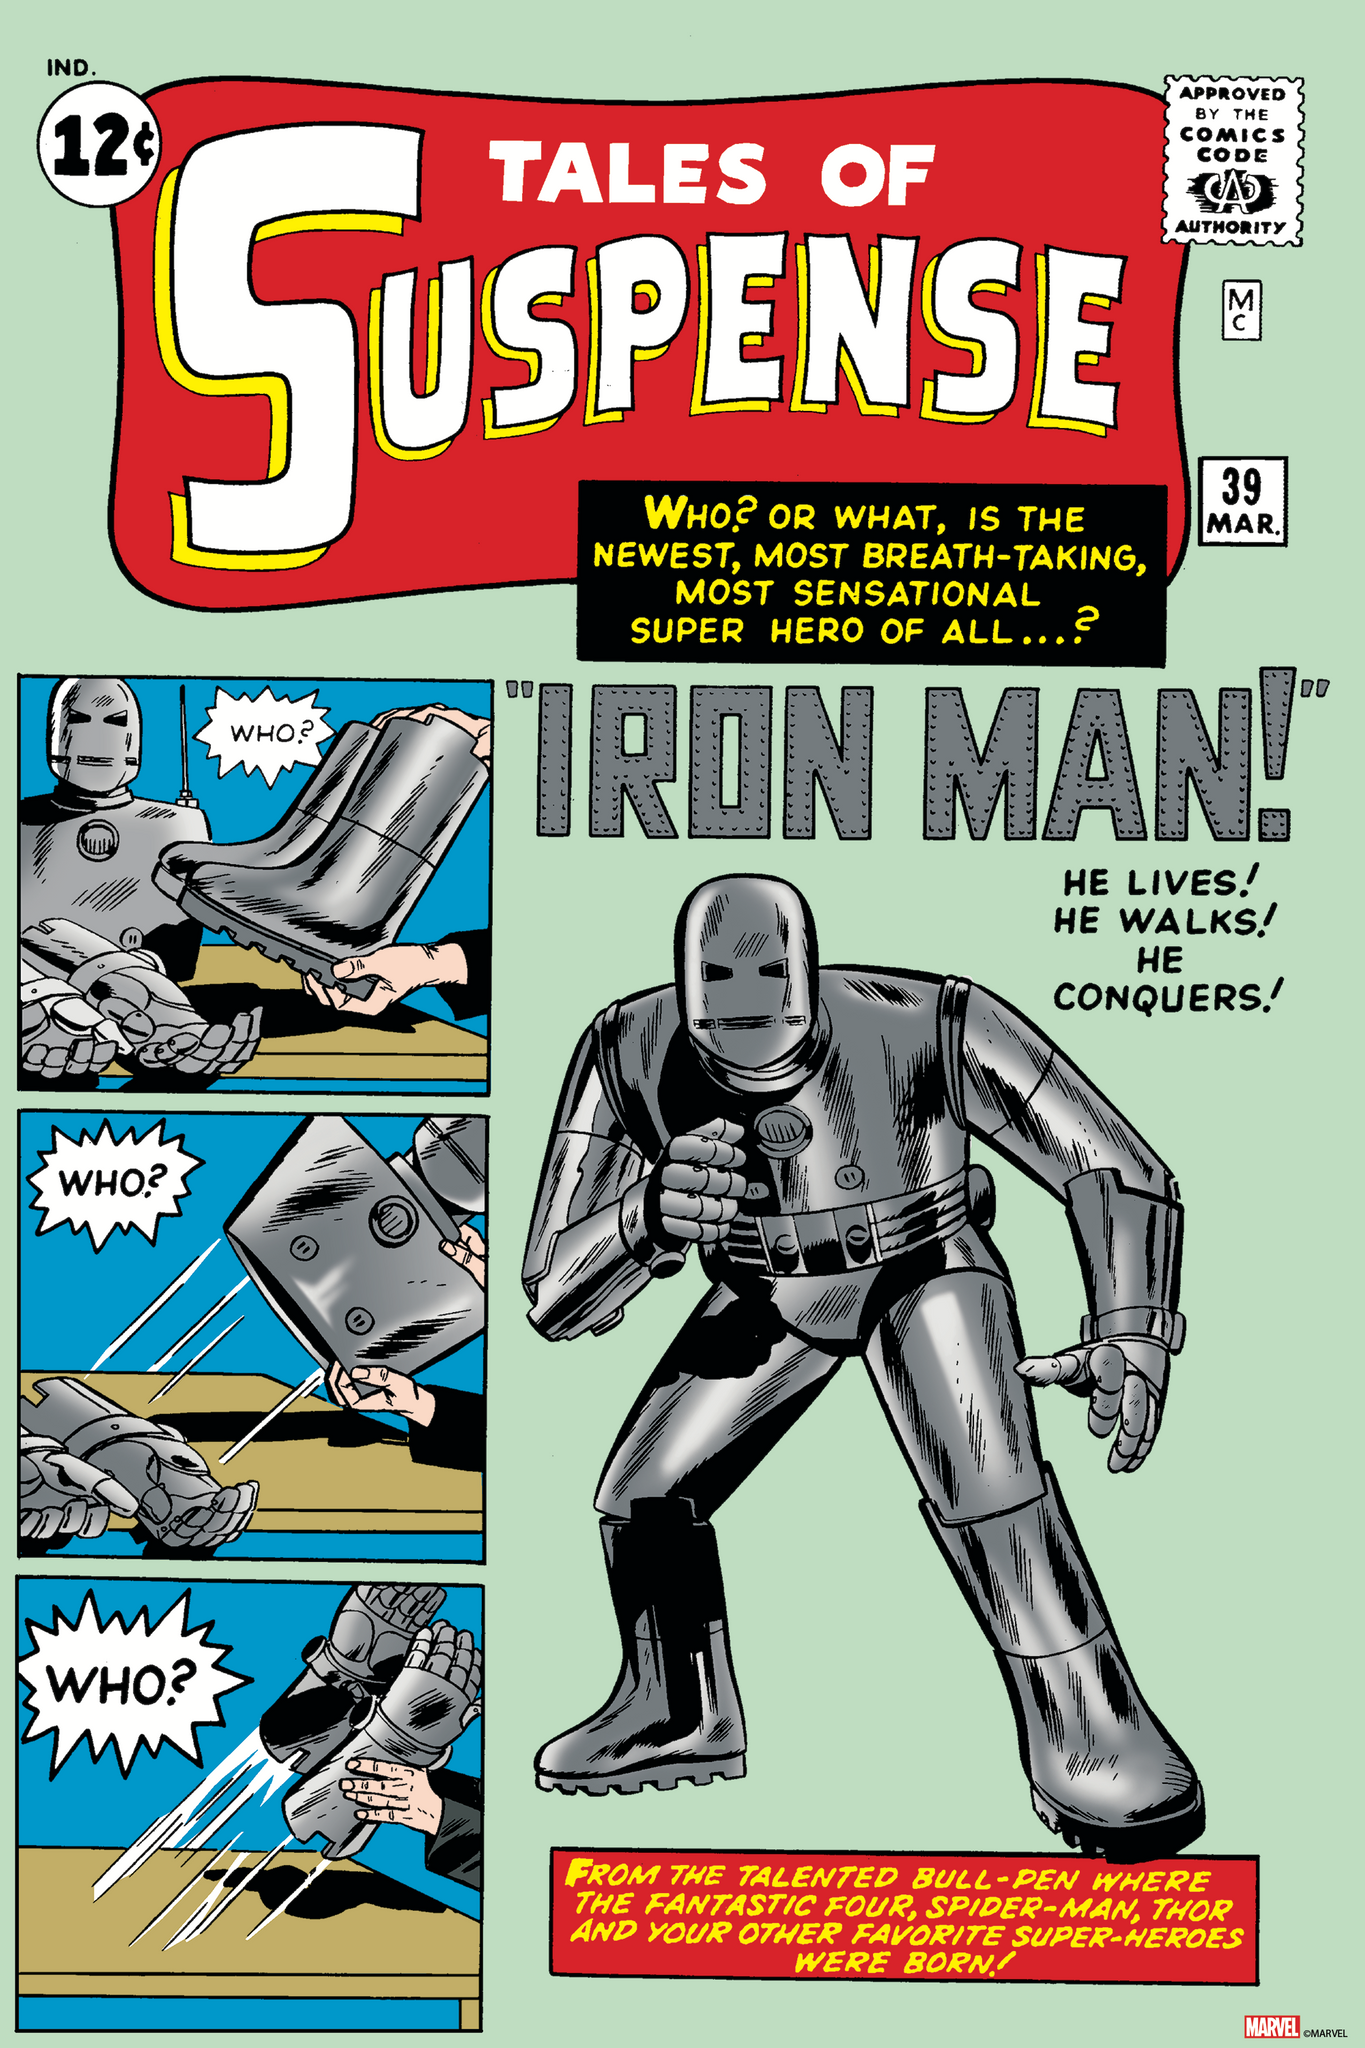 Tales of Suspense #39 Iron Man